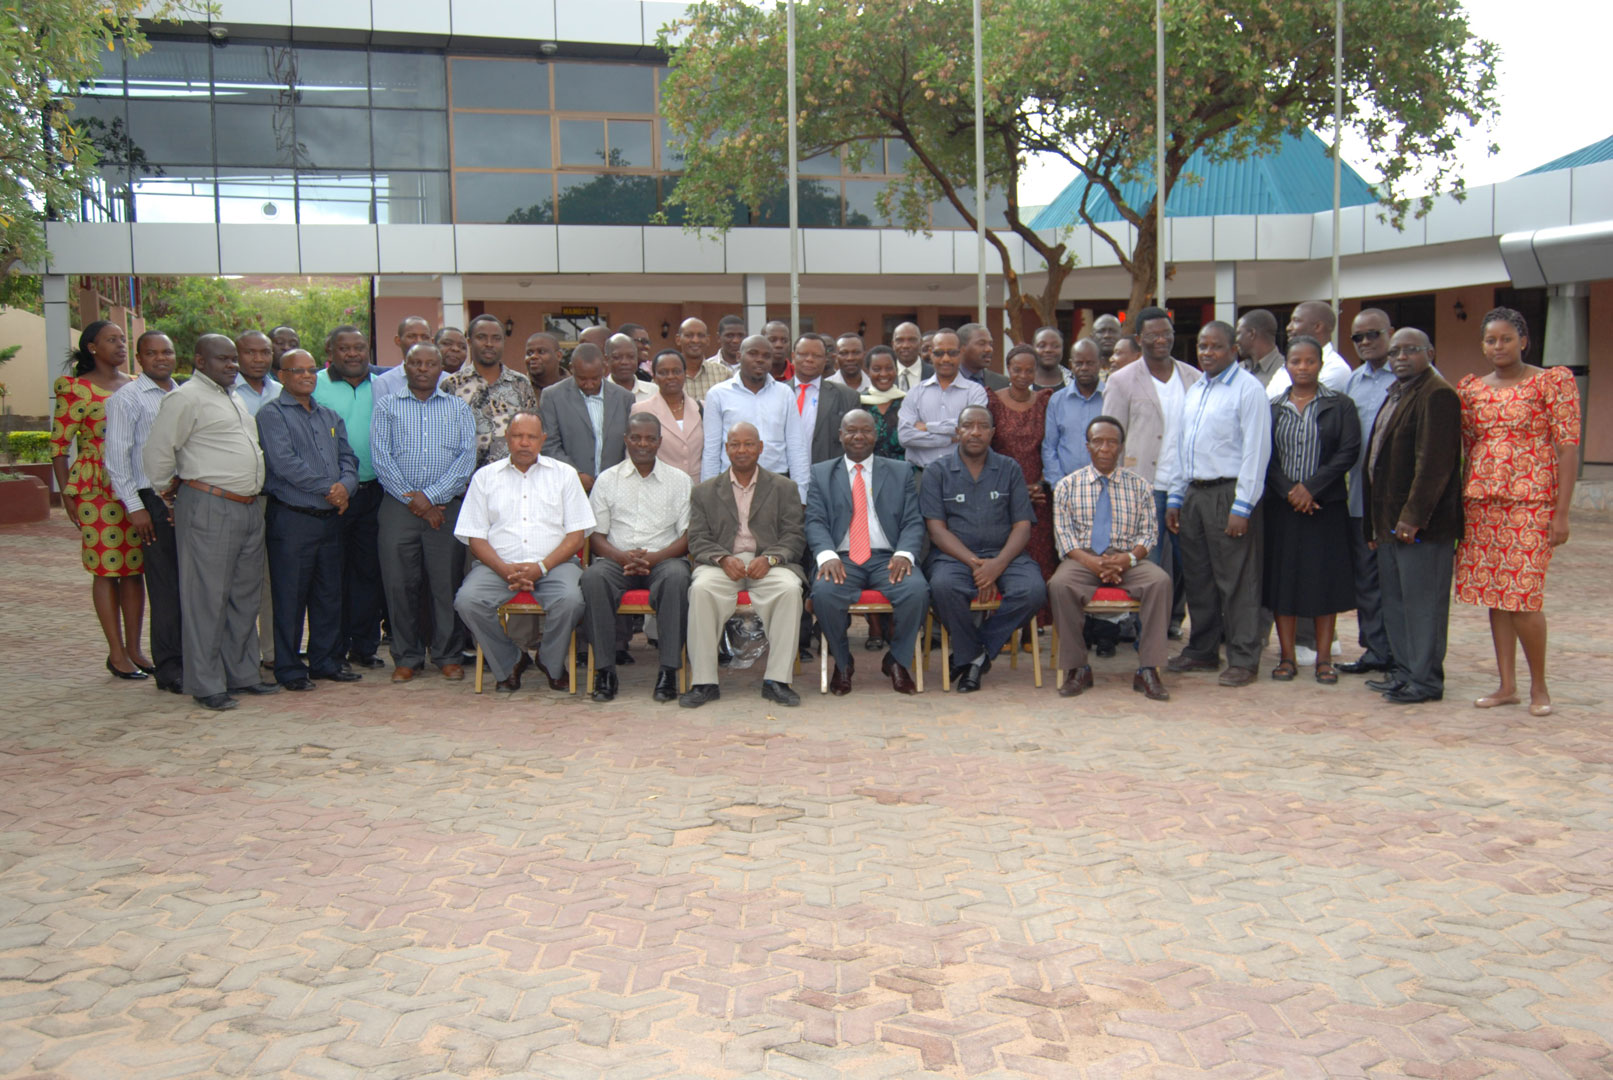  © 2015 AU-IBAR. Participants at the National SMPs Roll-out workshop for Tanzania held at Royal Village Hotel, Dodoma, Tanzania, 5-8 May 2015.